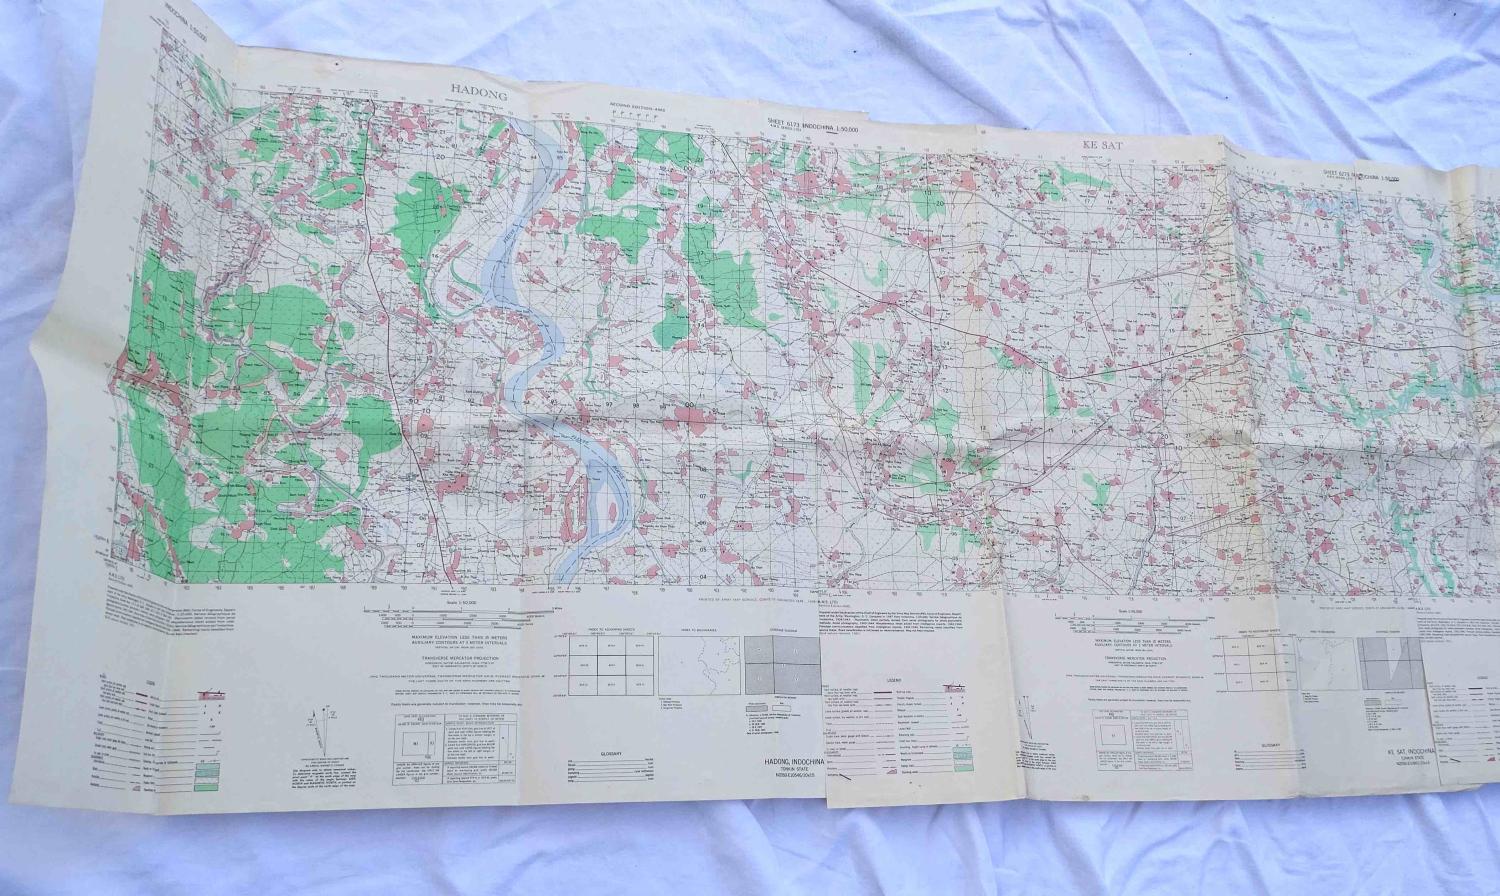 Lot de 4 cartes du Tonkin Haiphong, fleuve rouge Indochine  1:50.000   U.S. Army map service 1952